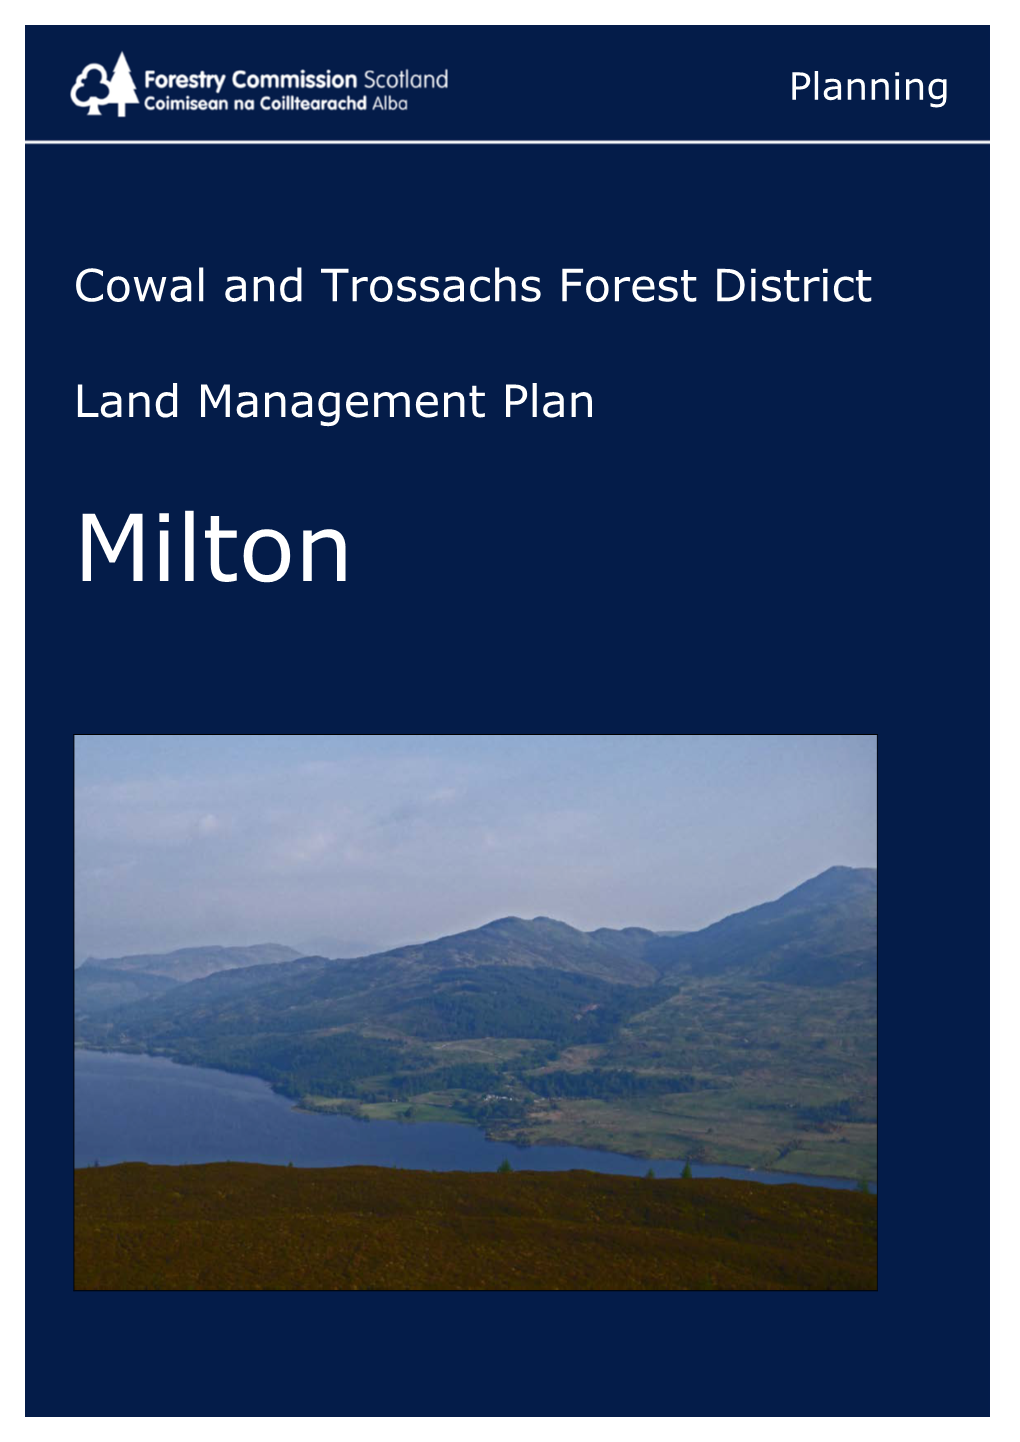 Milton Land Management Plan 2017-2027